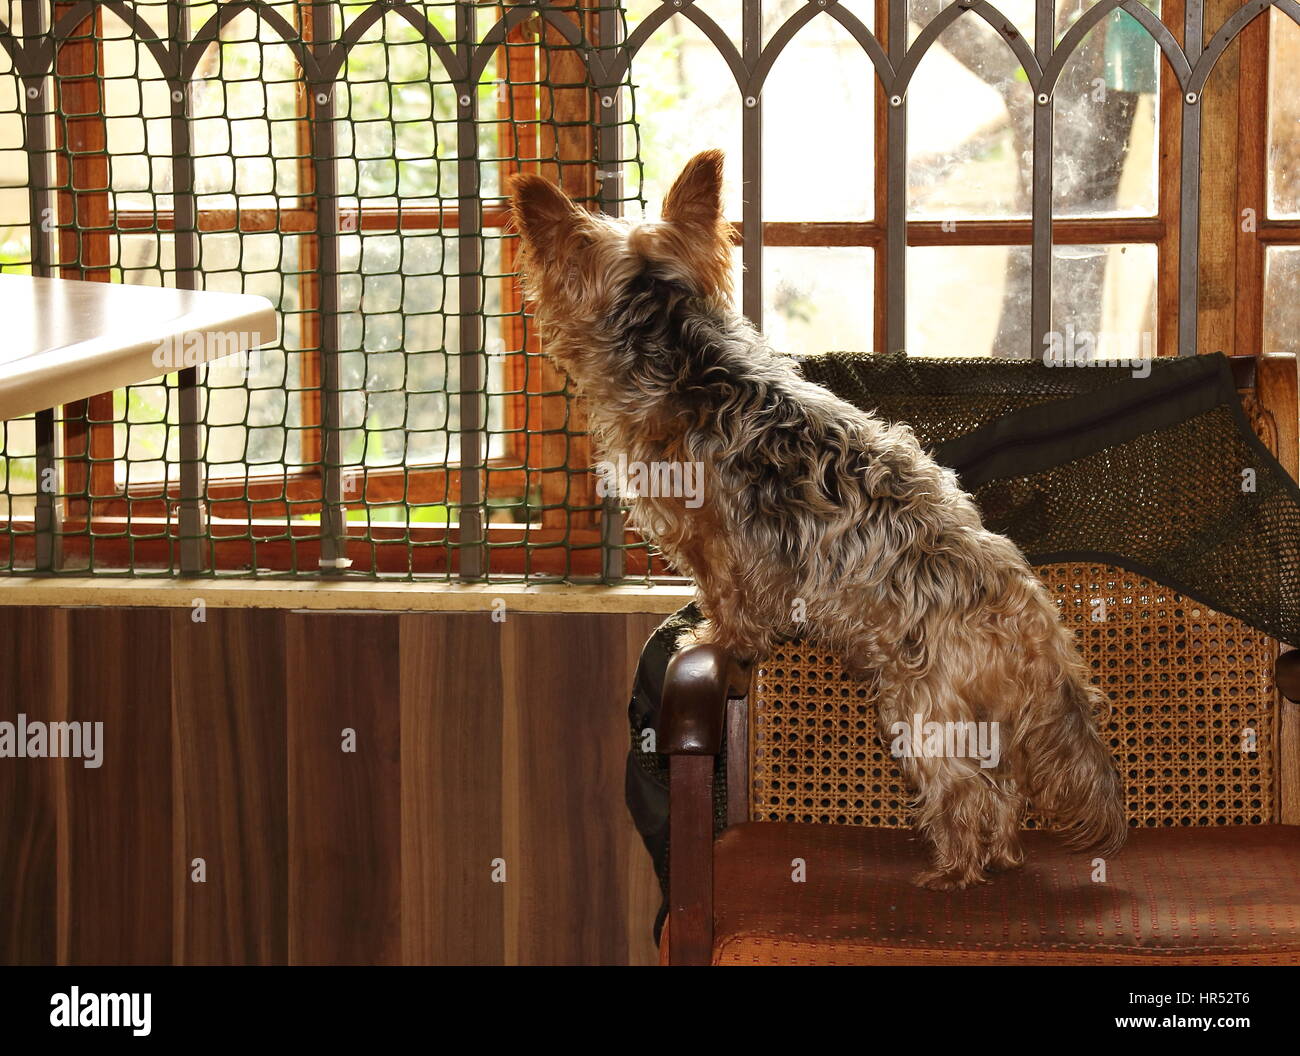 Perro Mascota en un cuidado formato horizontal Foto de stock